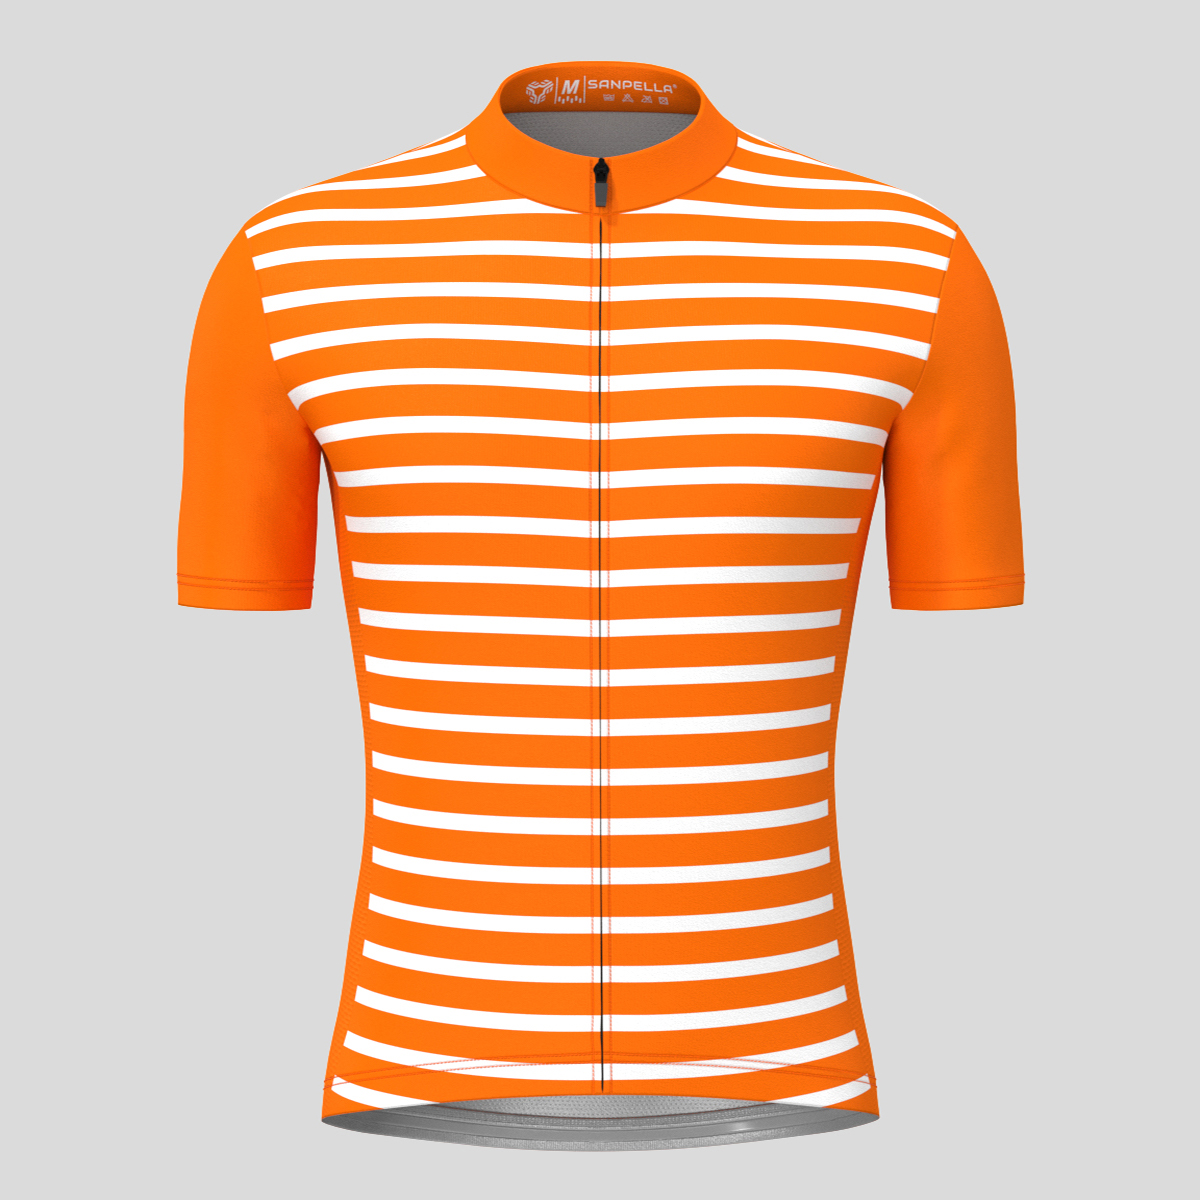 Minimal Stripes Men's Cycling Jersey - Orange